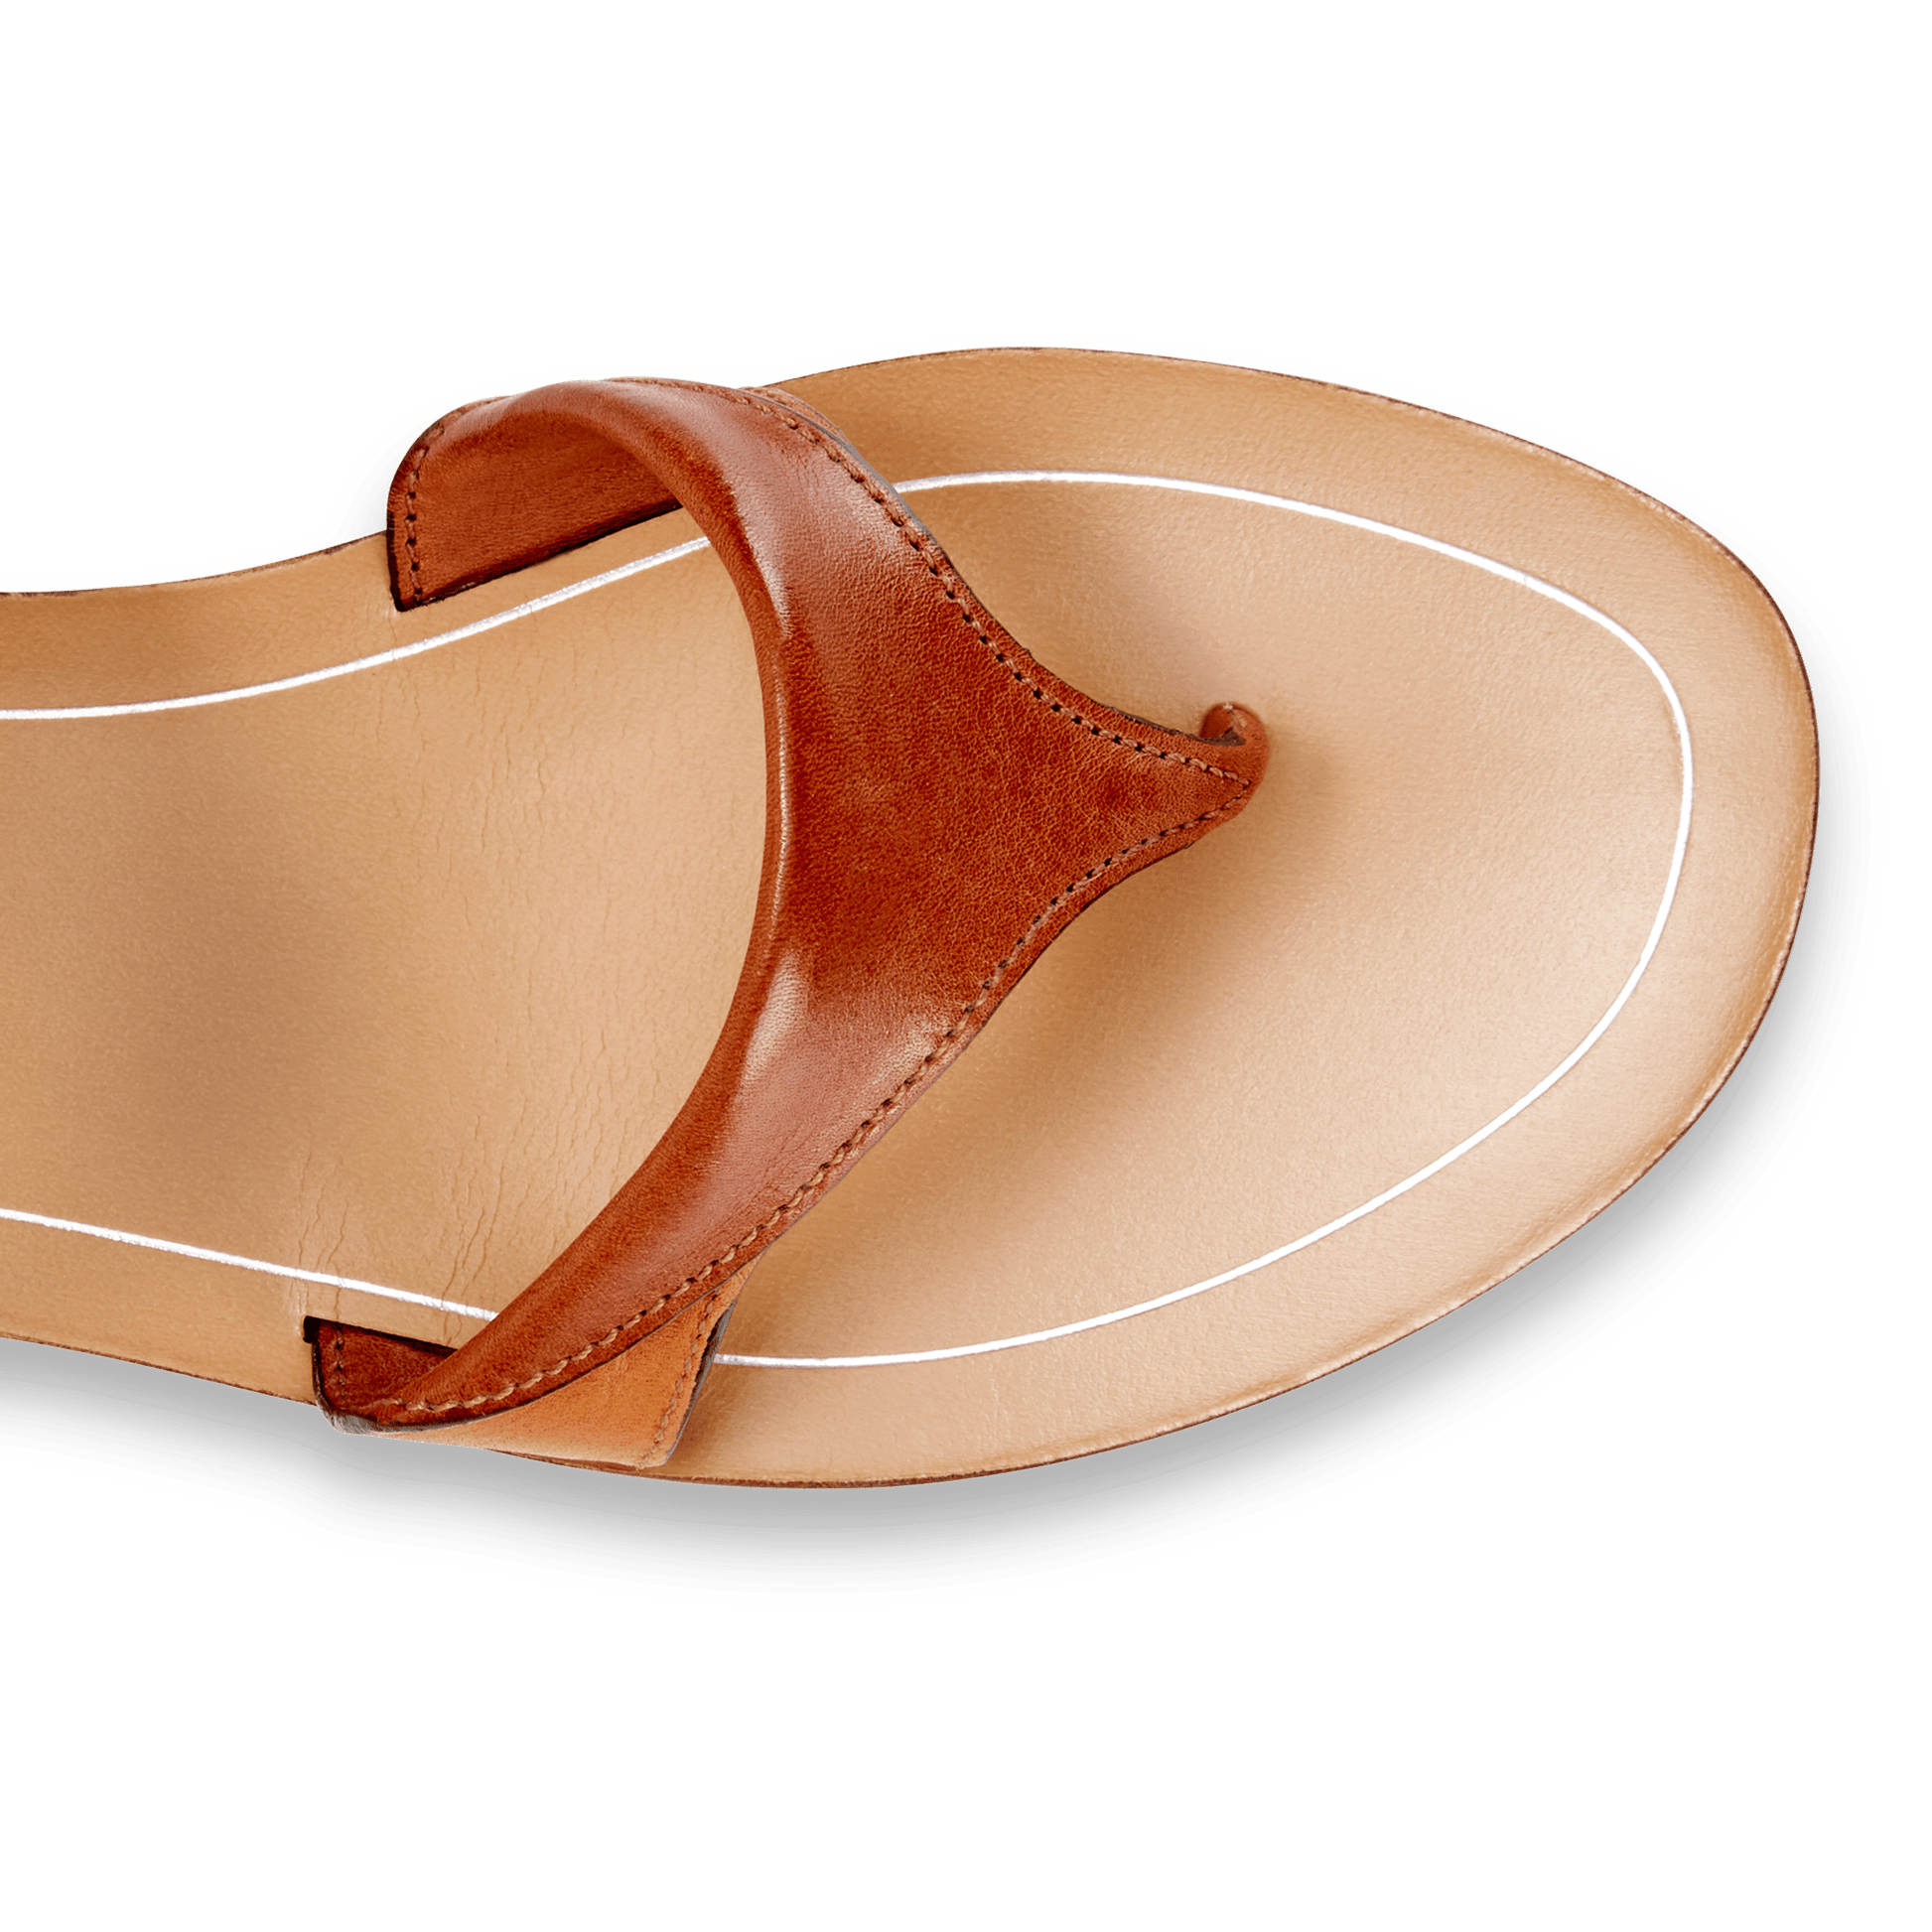  KuaiLu Men's Yoga Mat Leather Flip Flops Thong Sandals with  Arch Support | Sandals